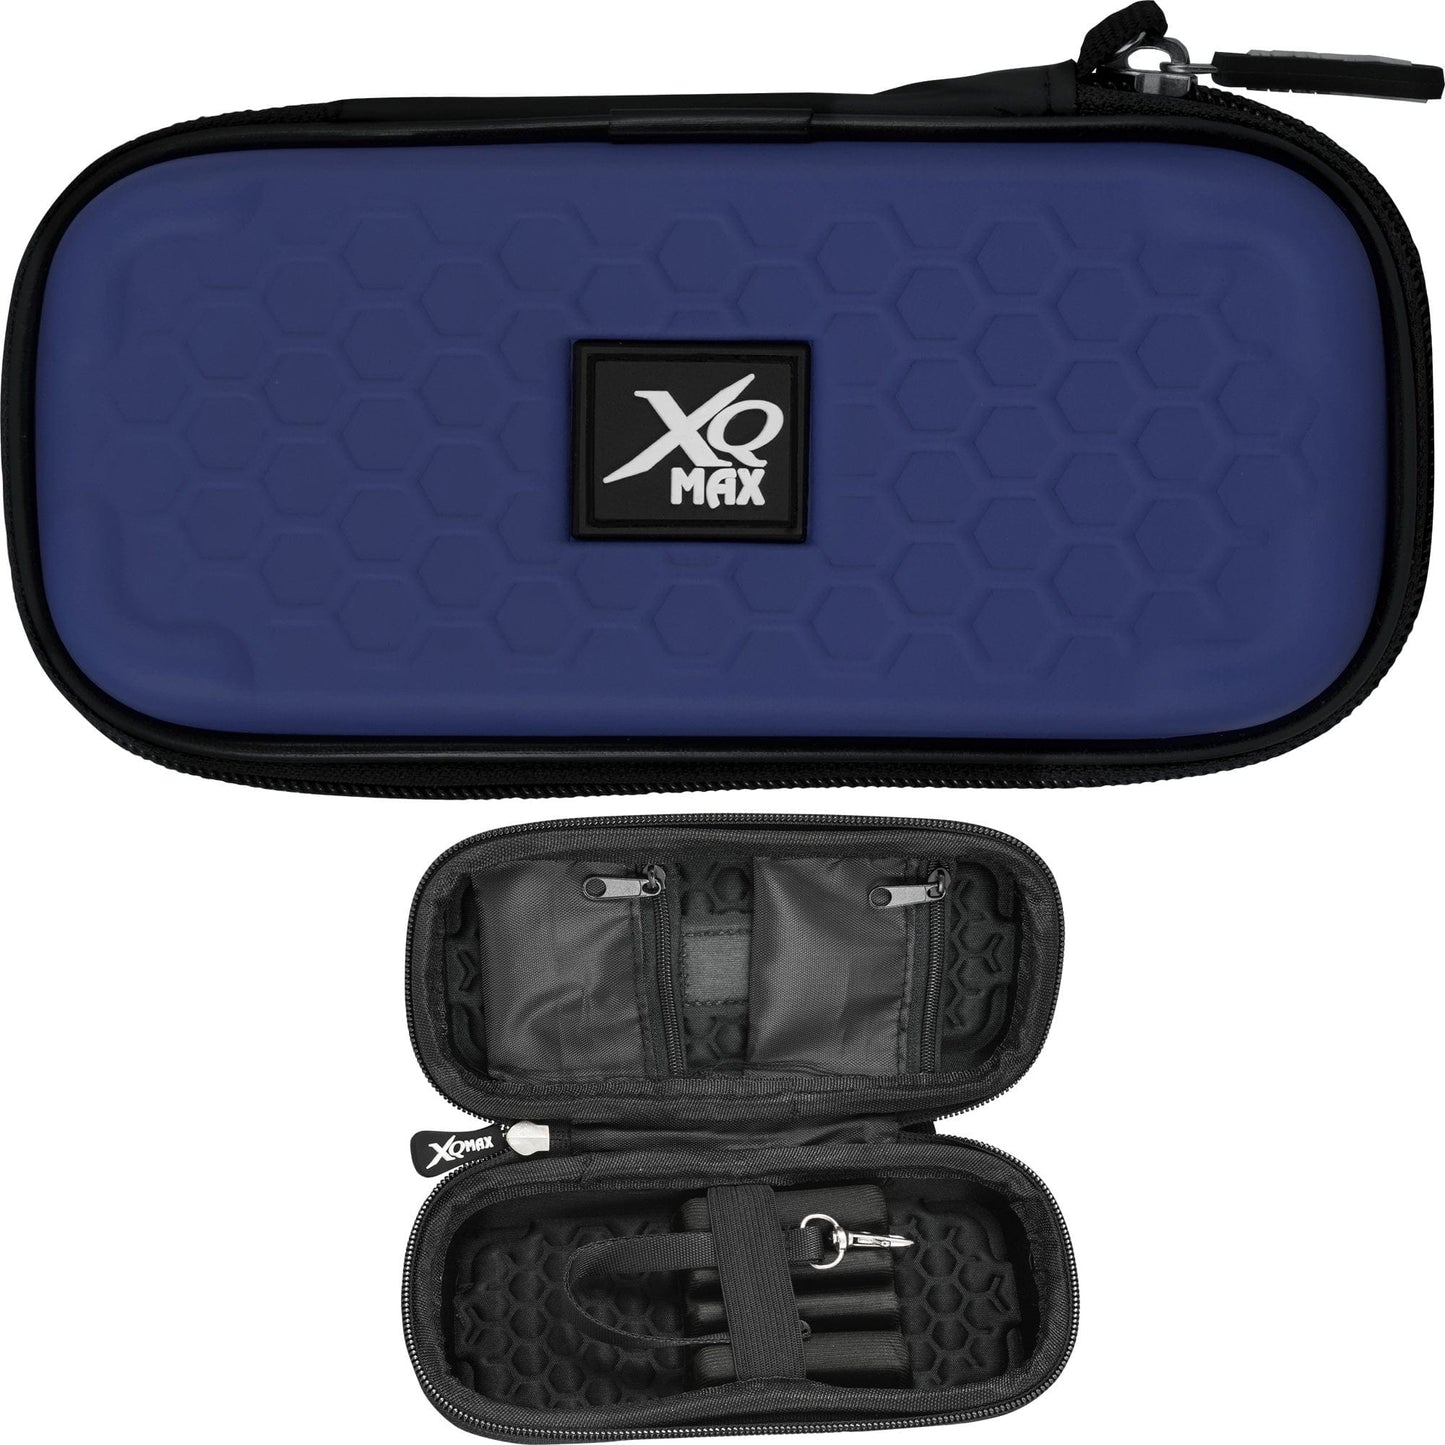 XQMax Darts Wallet - Compact - Small Blue